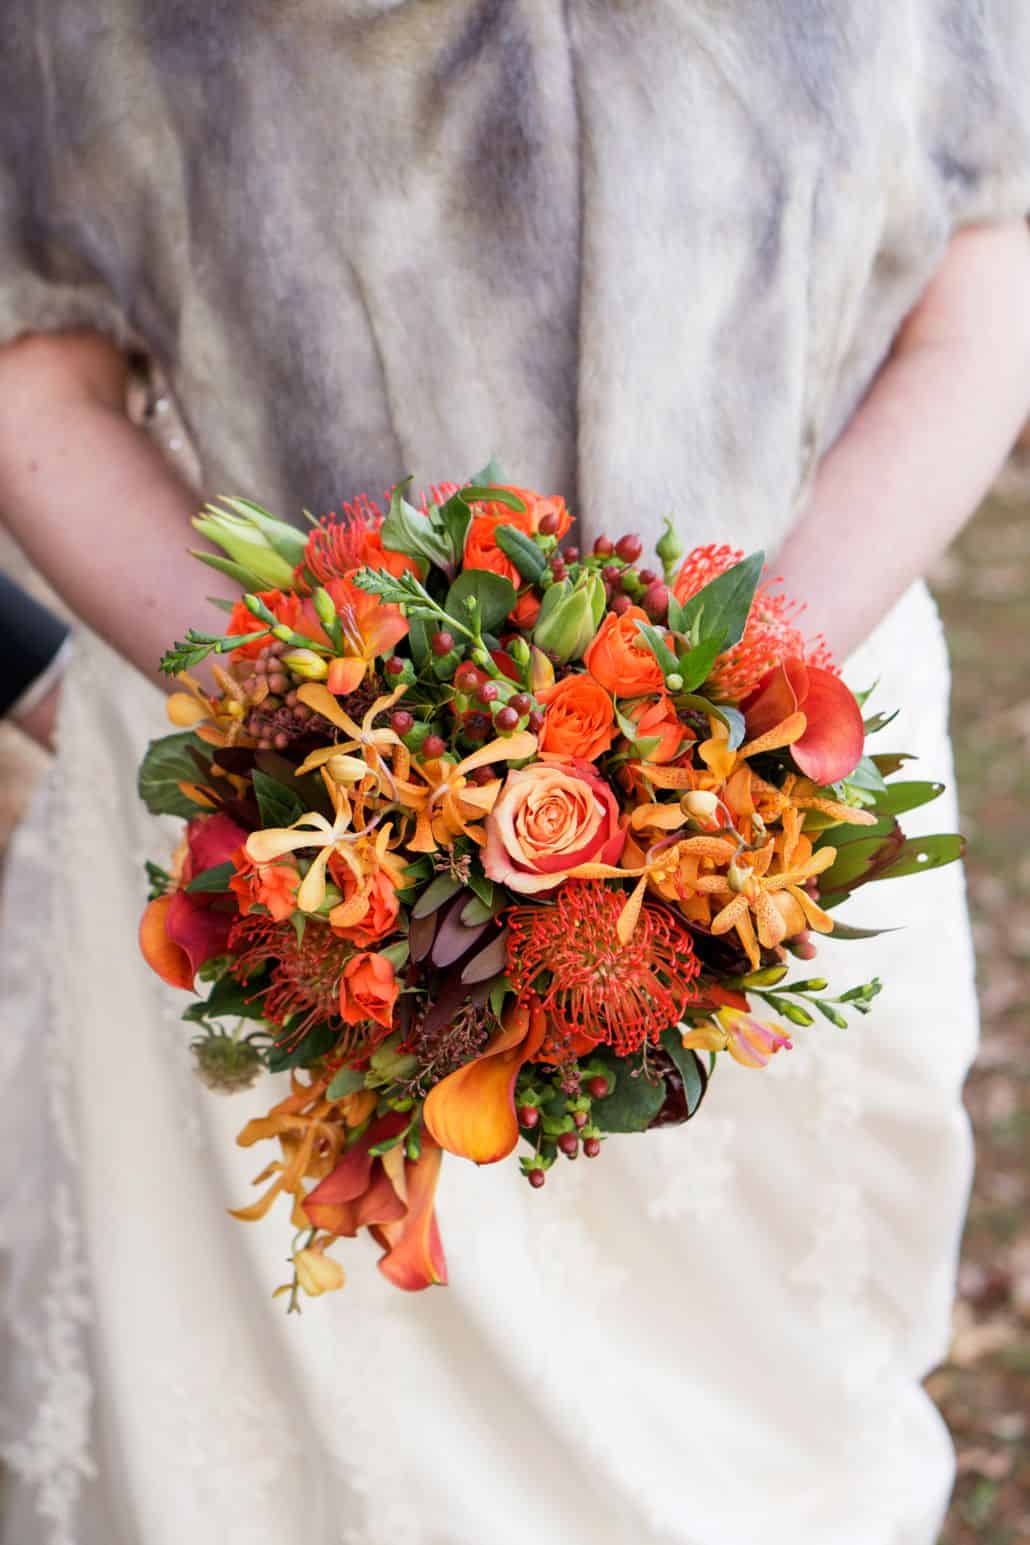 burnt orange and green wedding bouquet, roses, protea, calla lily, Viburnum florist, Prineton, NJ wedding photographer.